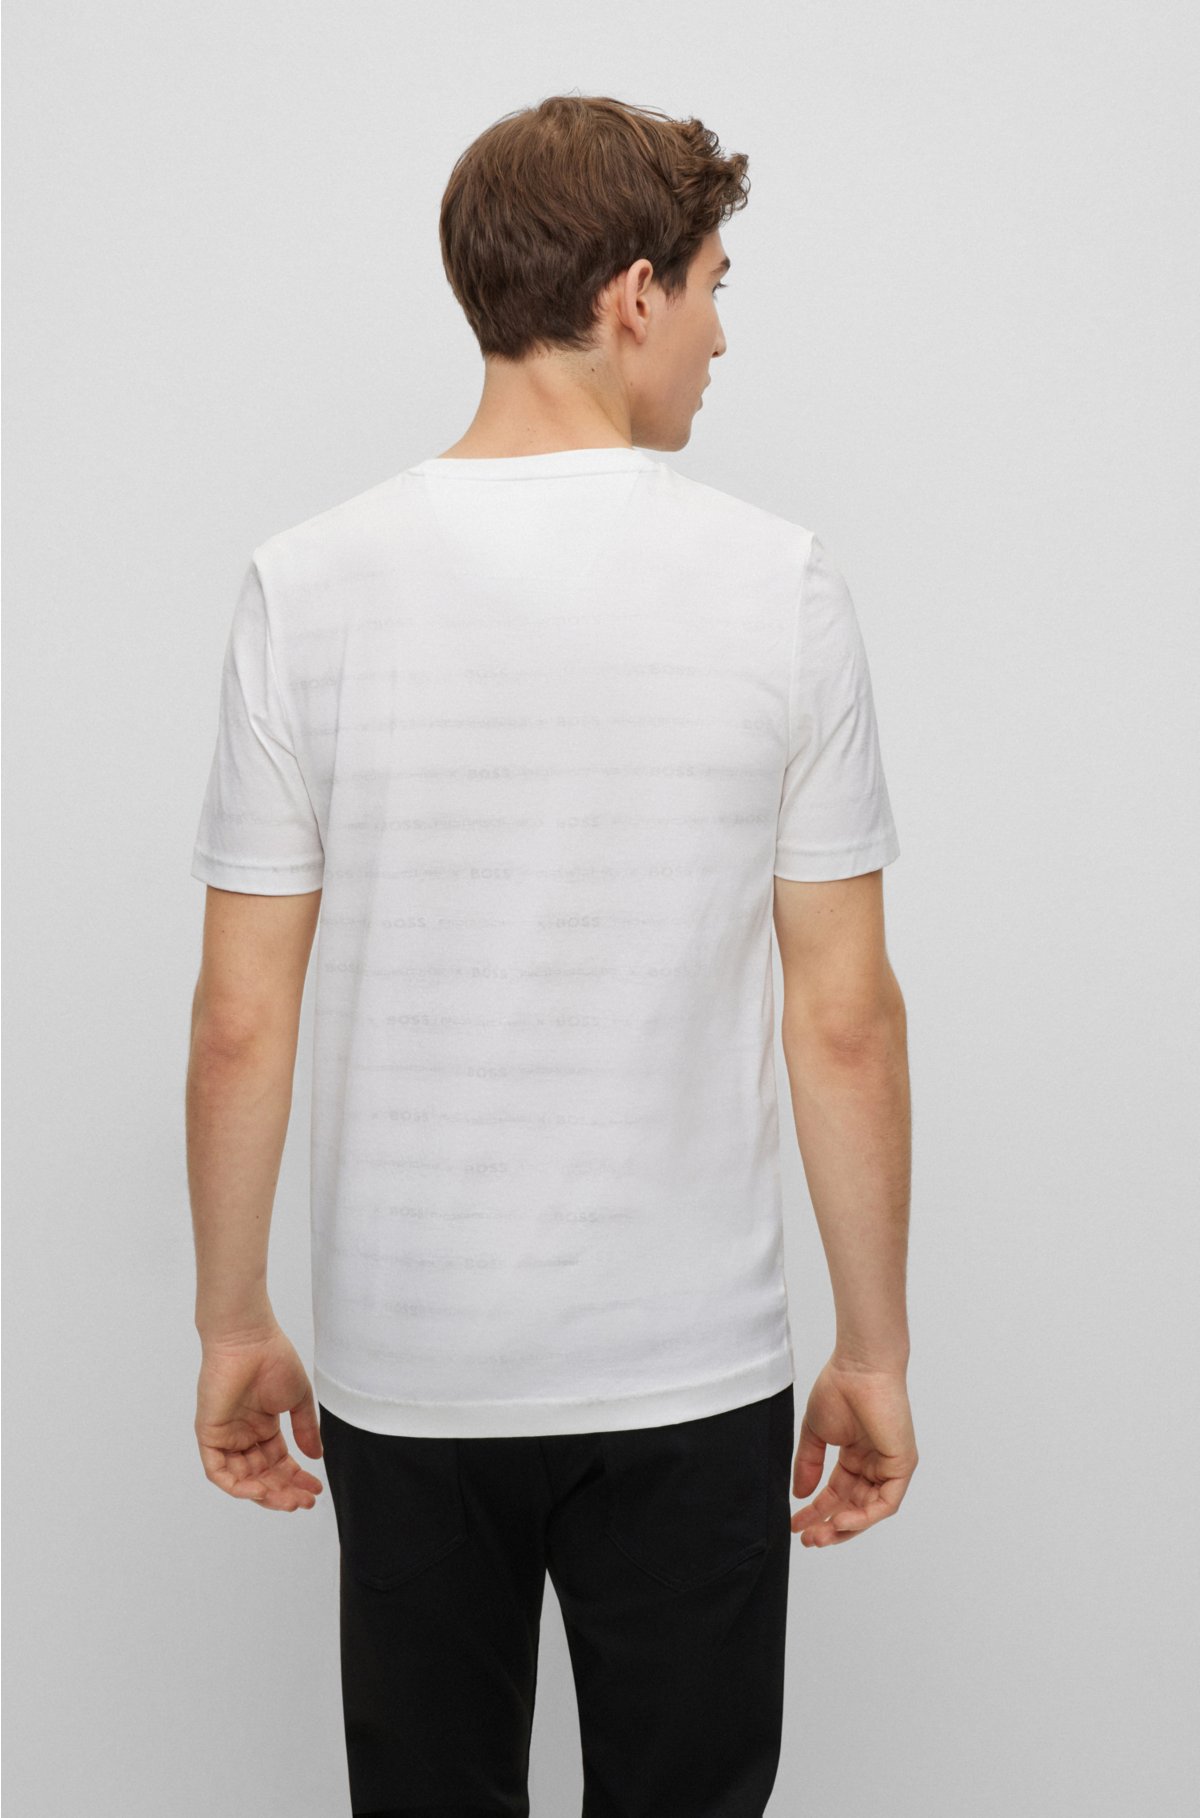 MOSS BOSS Essential T-Shirt for Sale by damiansucks